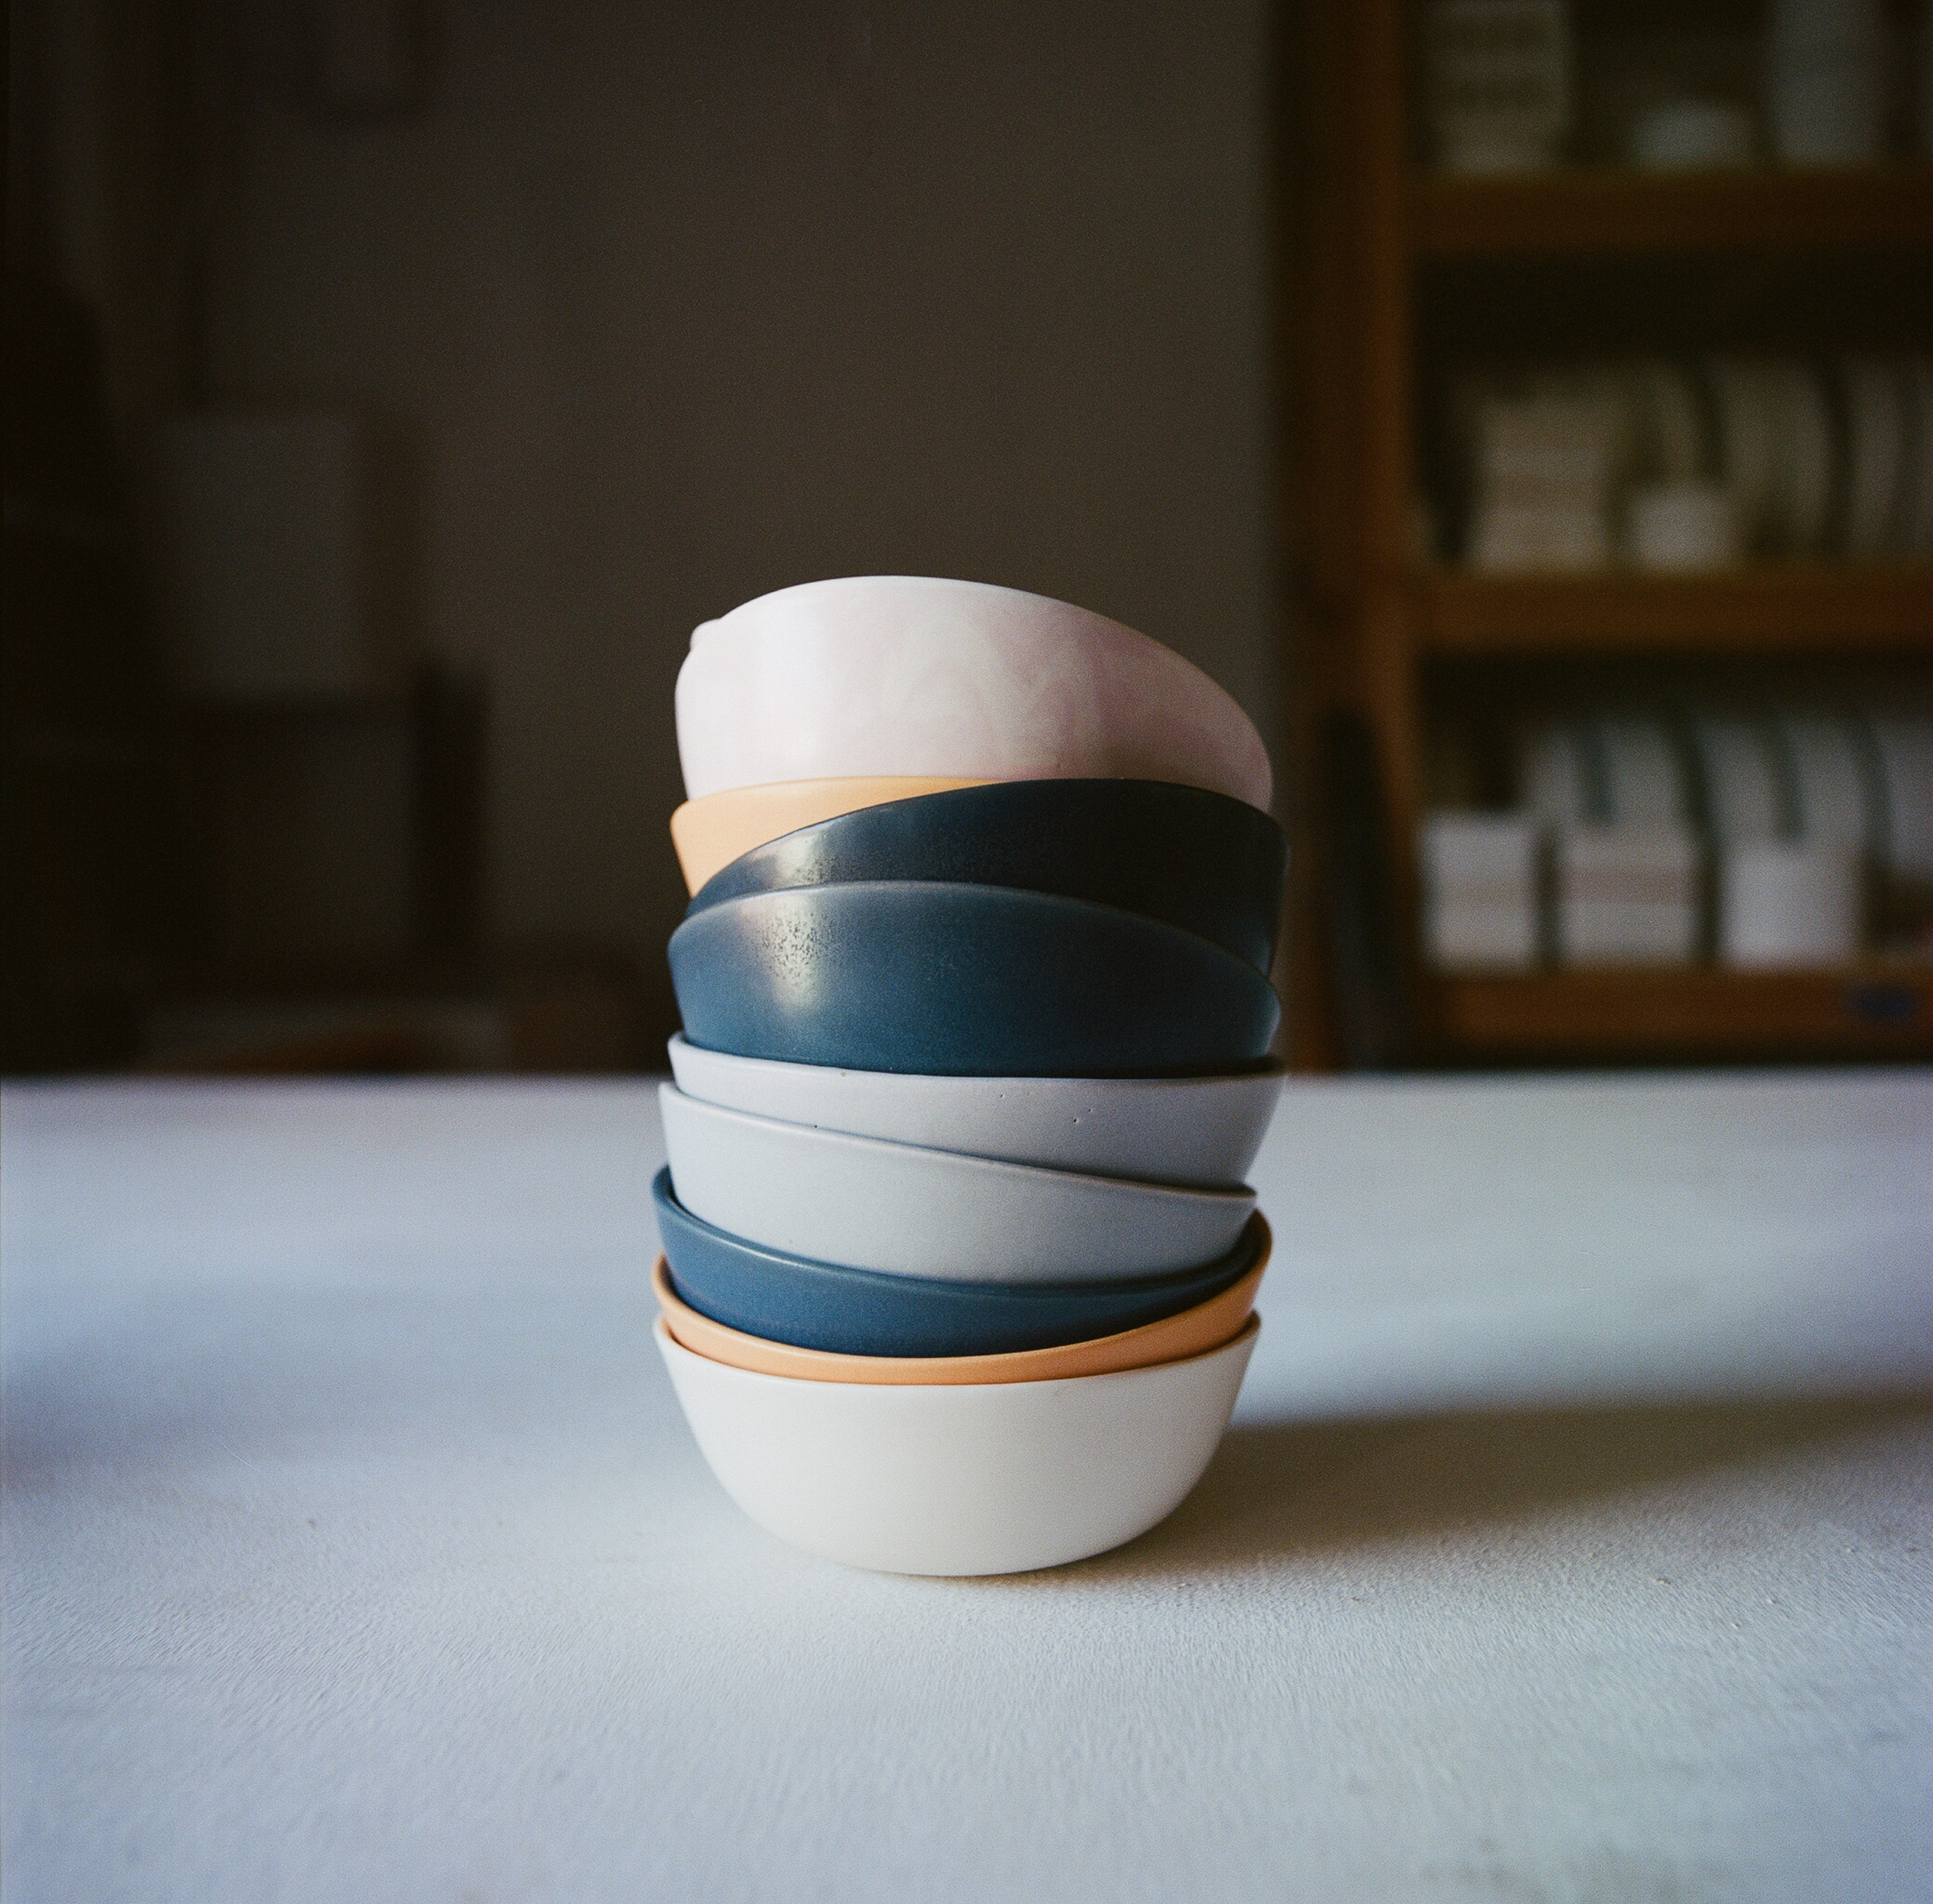 Photographs of Felt+Fat ceramics for Woven Magazine